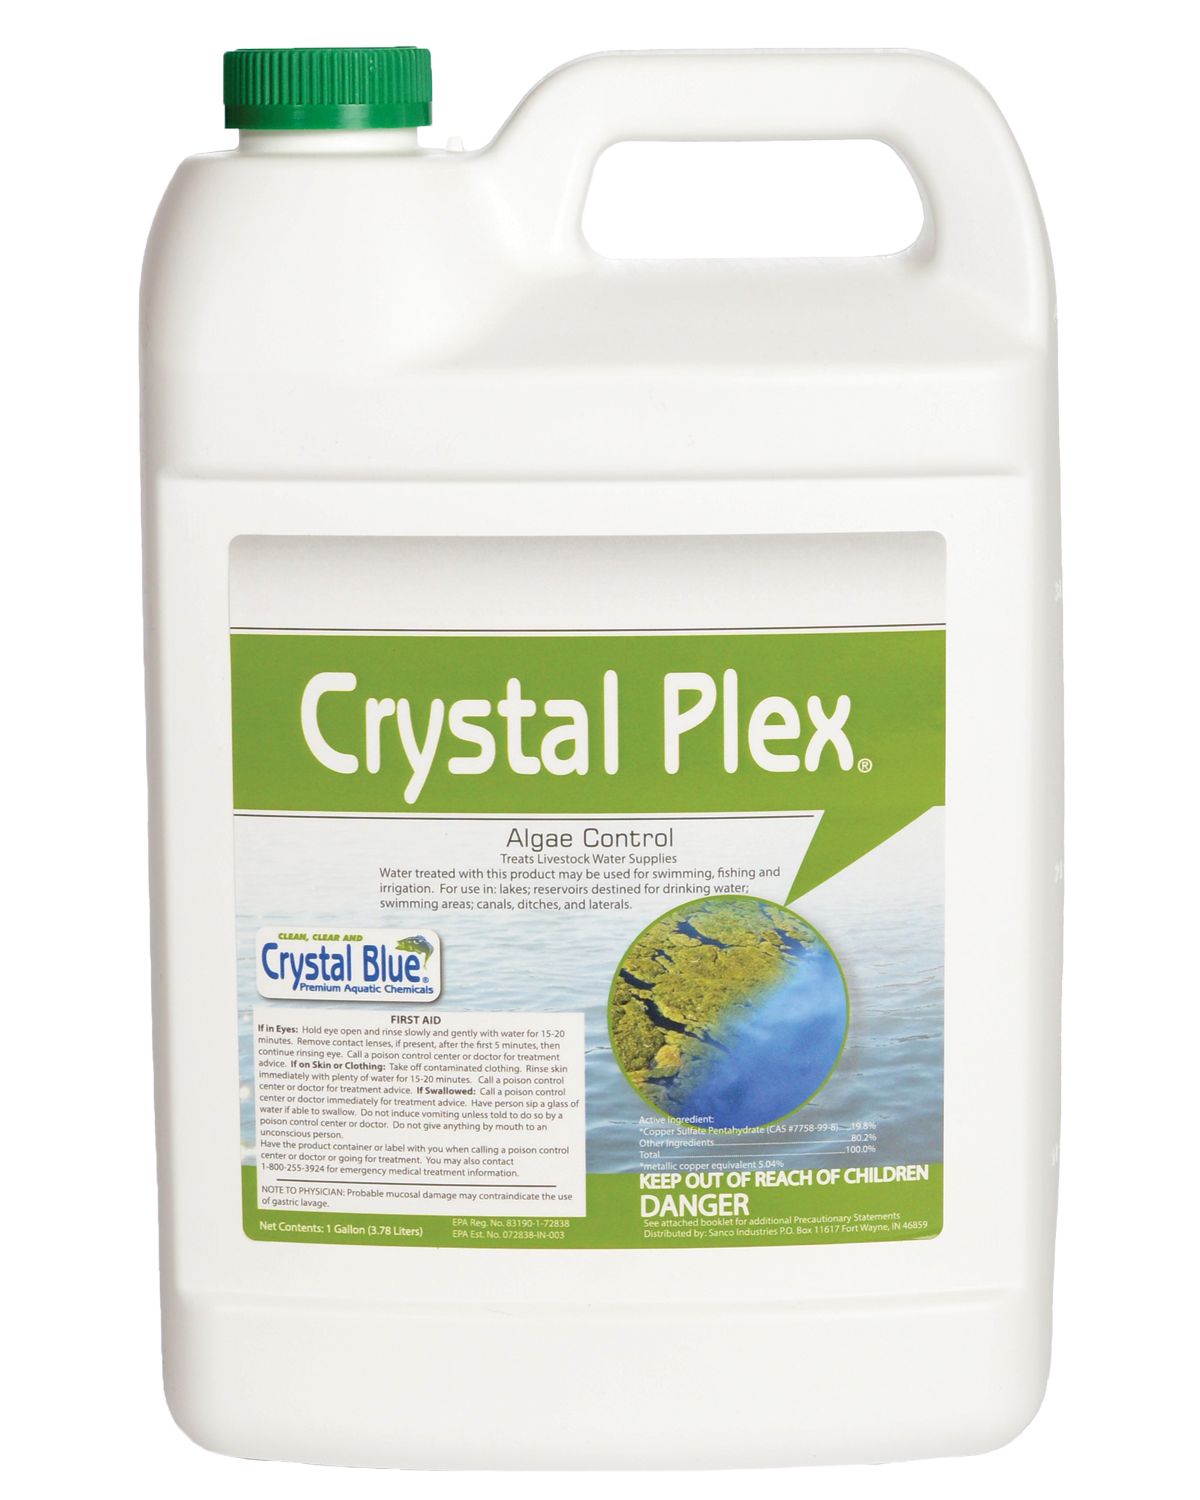 Cristal Products Cristal X 1gal